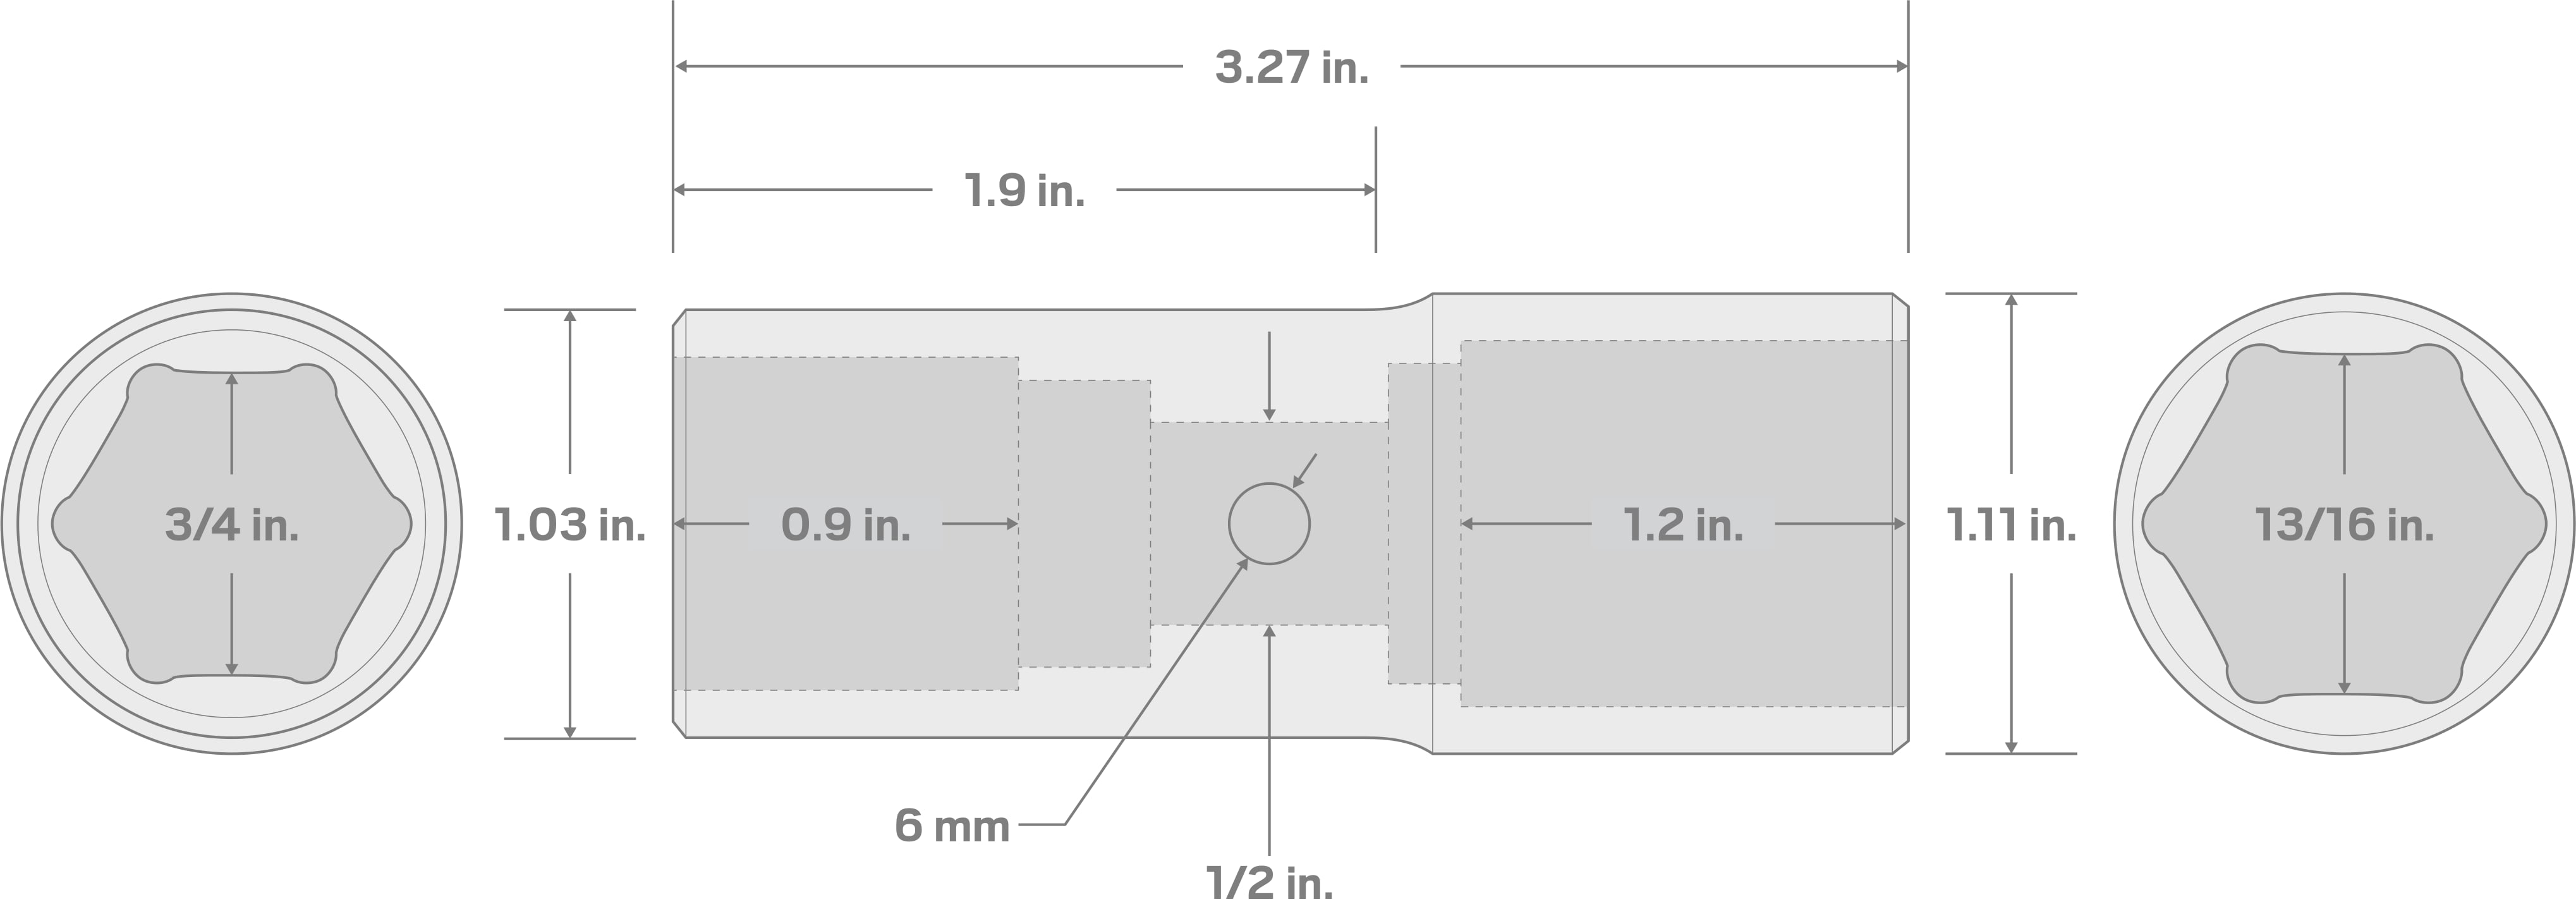 Specs for 1/2 Inch Drive 3/4 x 13/16 Inch Thin Wall Impact Flip Socket